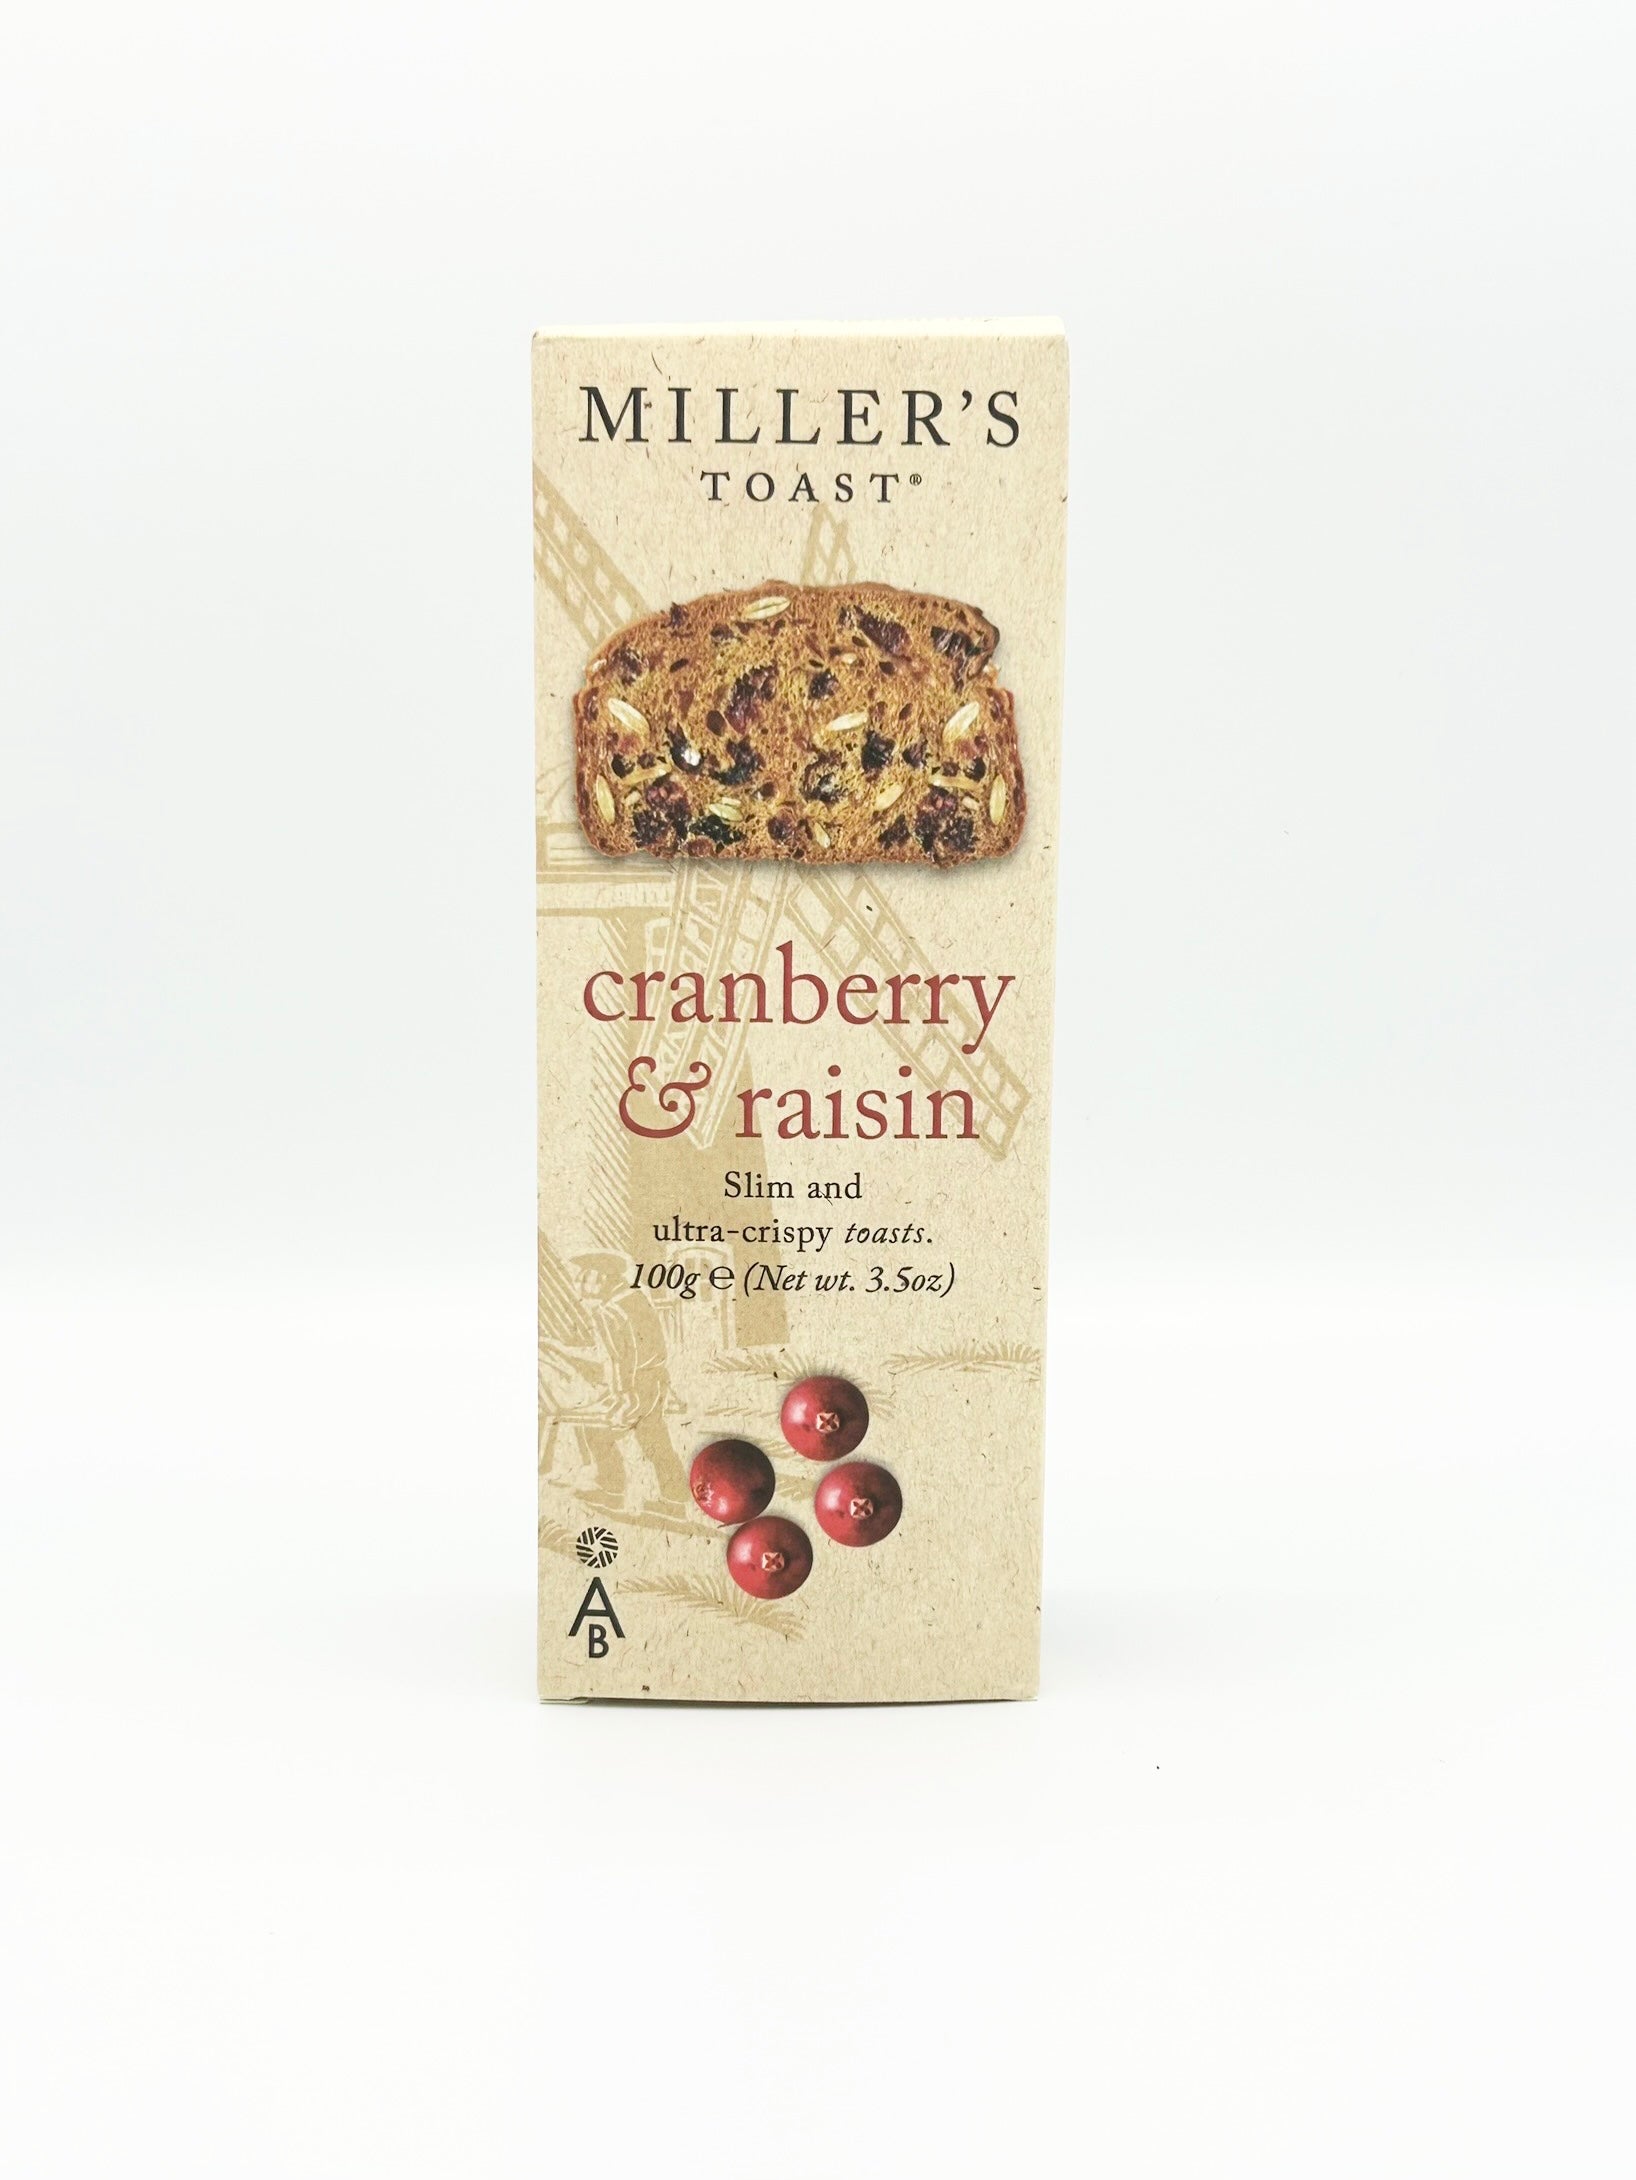 Millers Cranberry & Raisin Toast